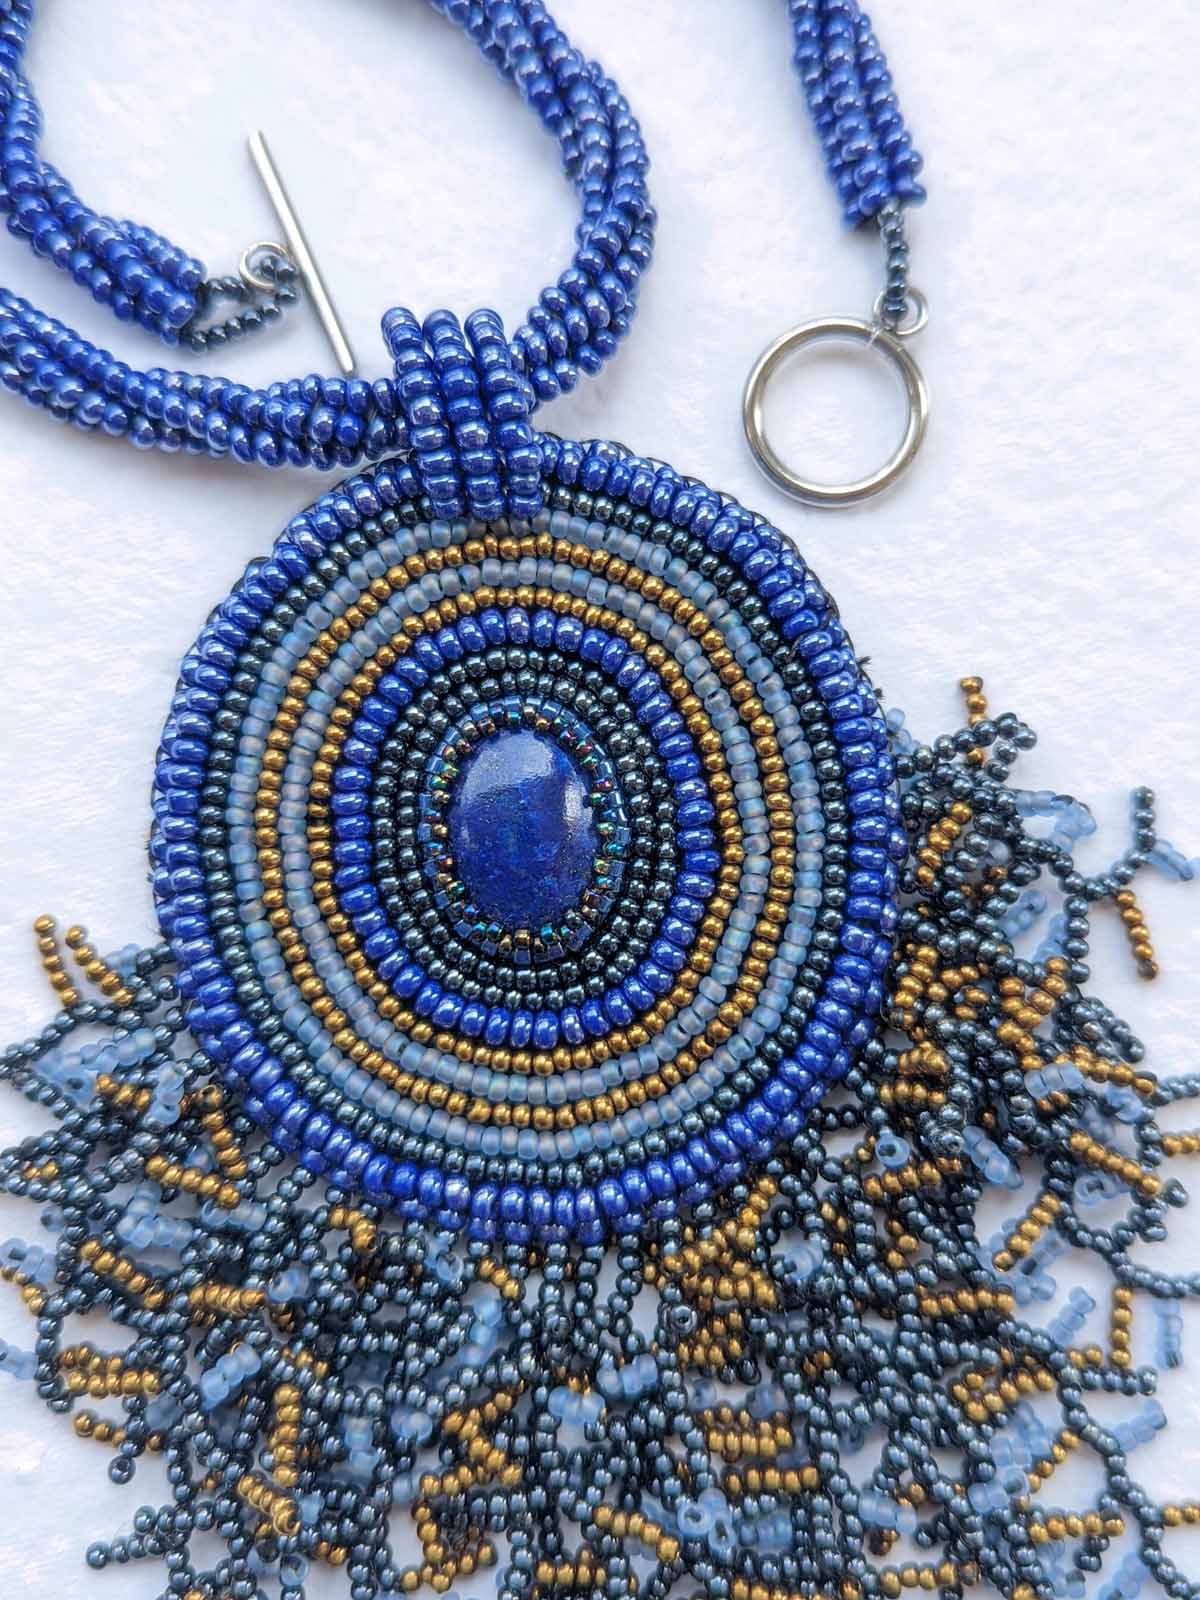 Beaded necklace (Handmade)